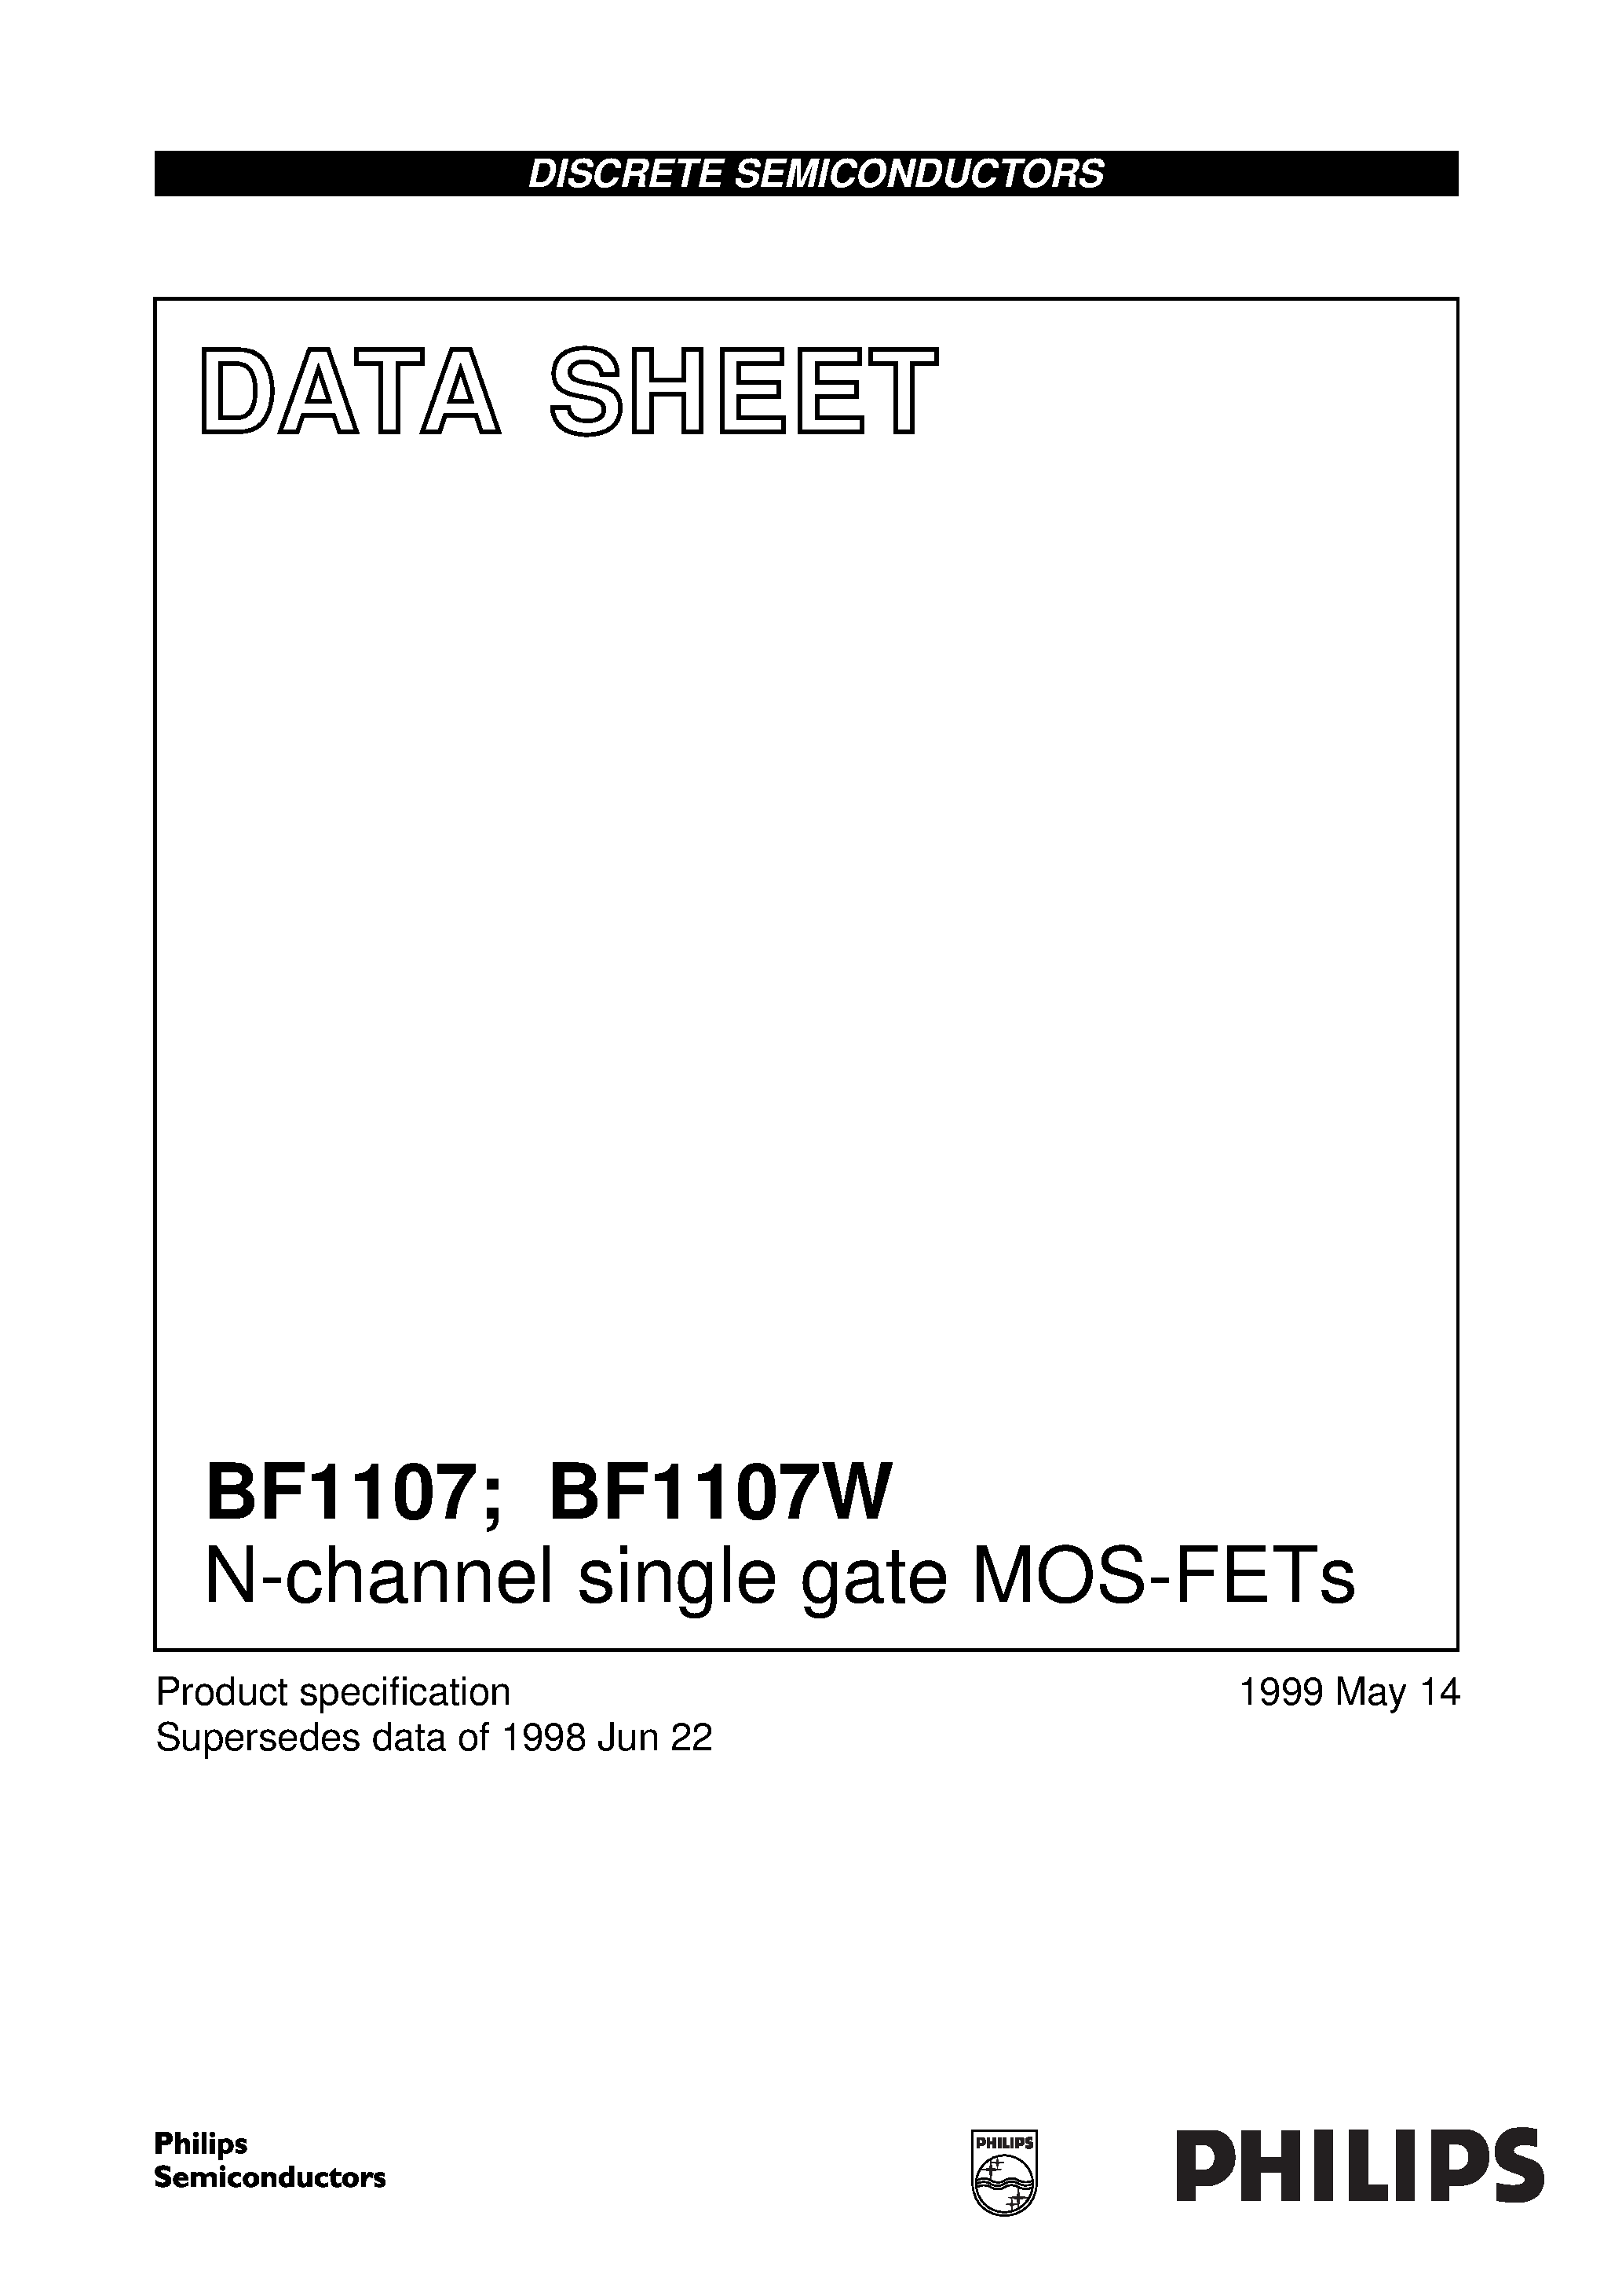 Даташит BF1107 - N-channel single gate MOS-FETs страница 1